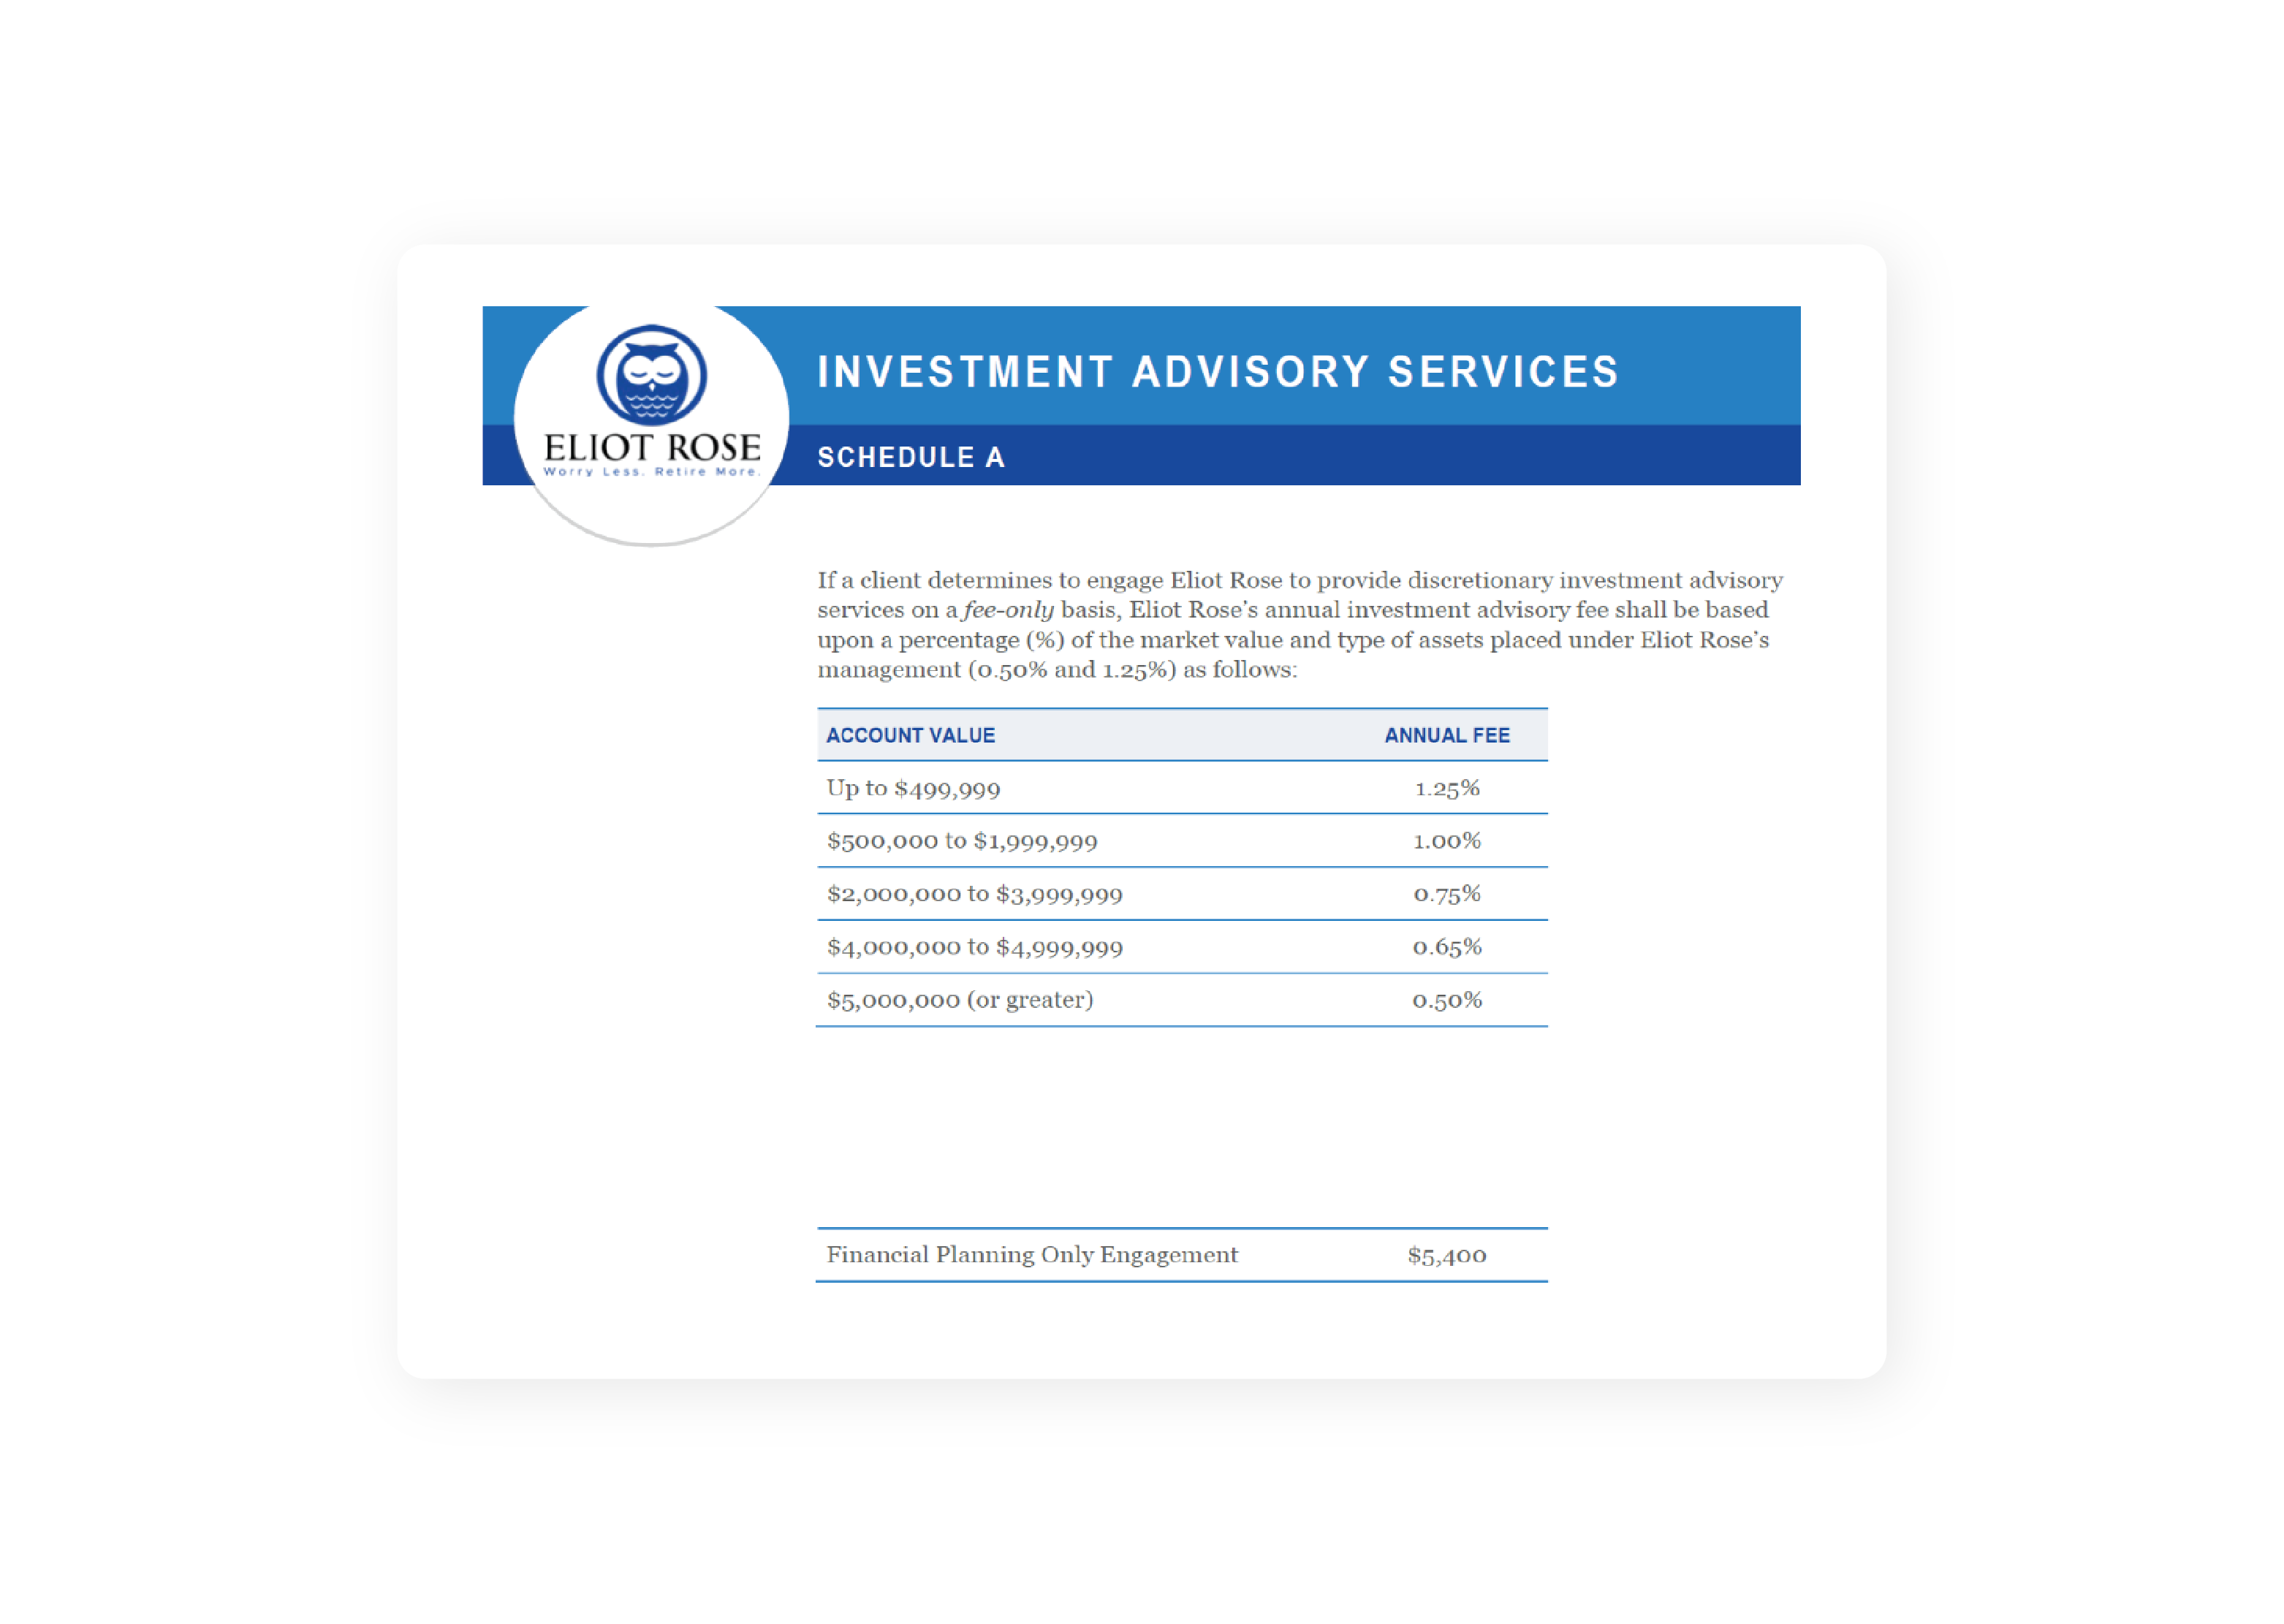 Eliot Rose Investment Advisory Services